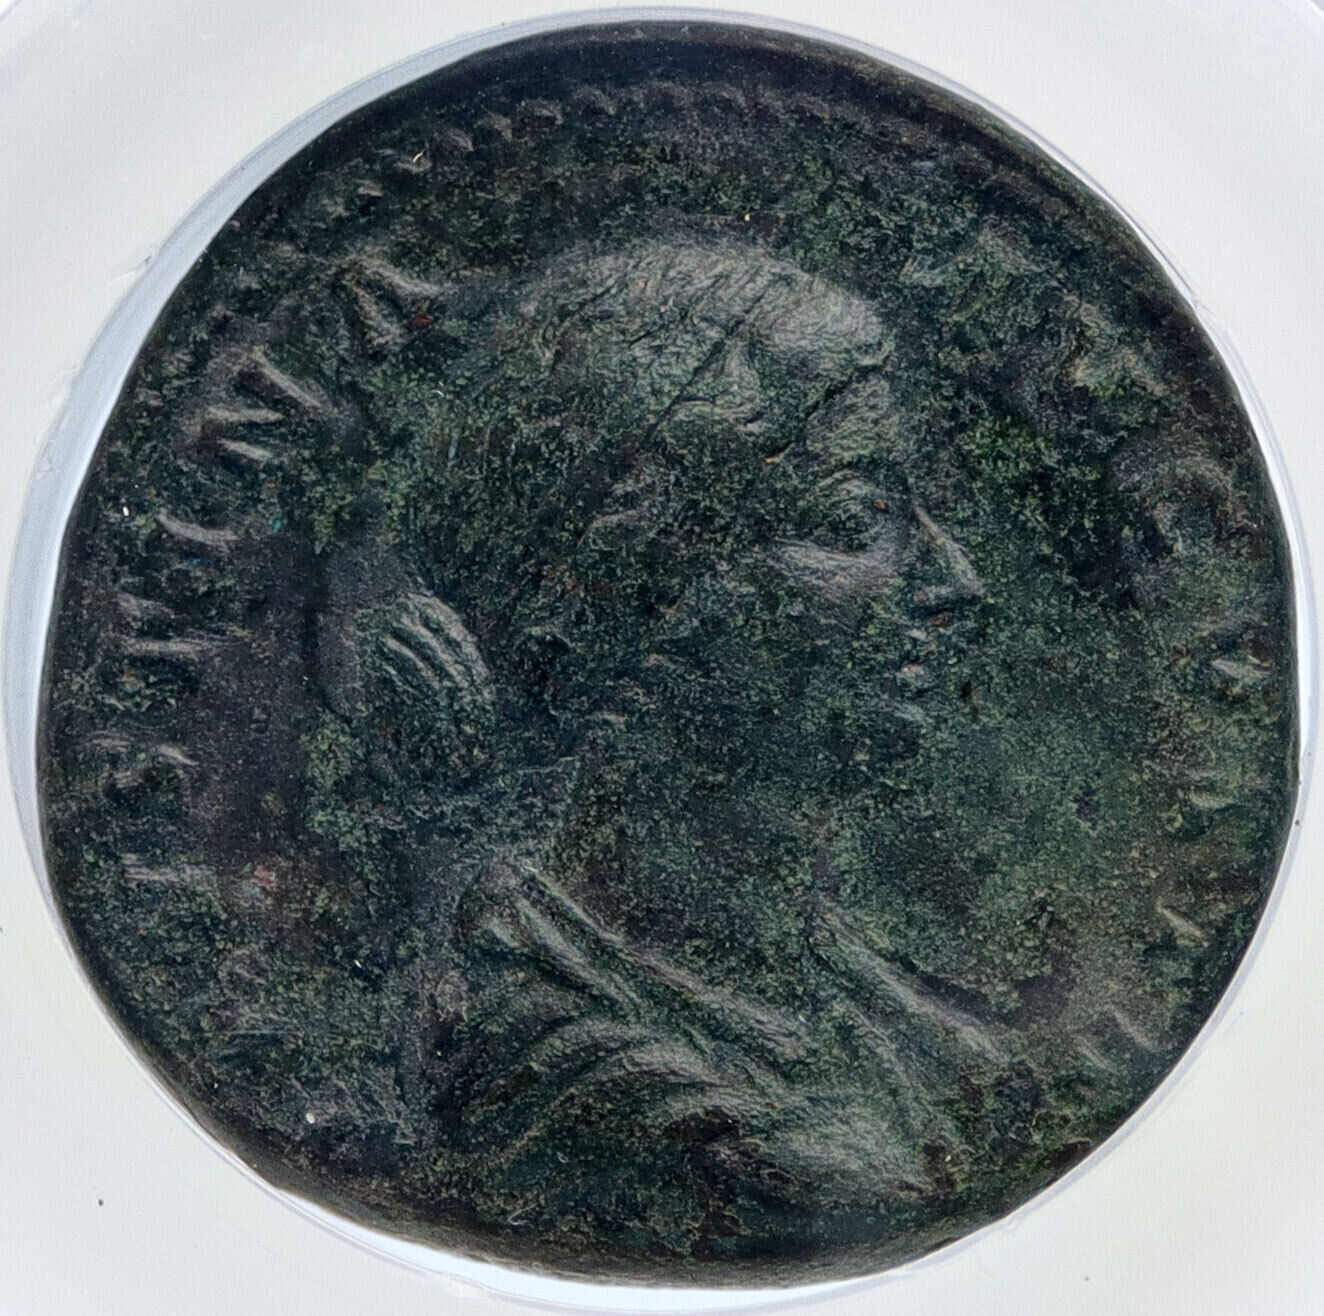 FAUSTINA II Marcus Aurelius Wife Sestertius Ancient Roman Coin NGC Ch XF i61205